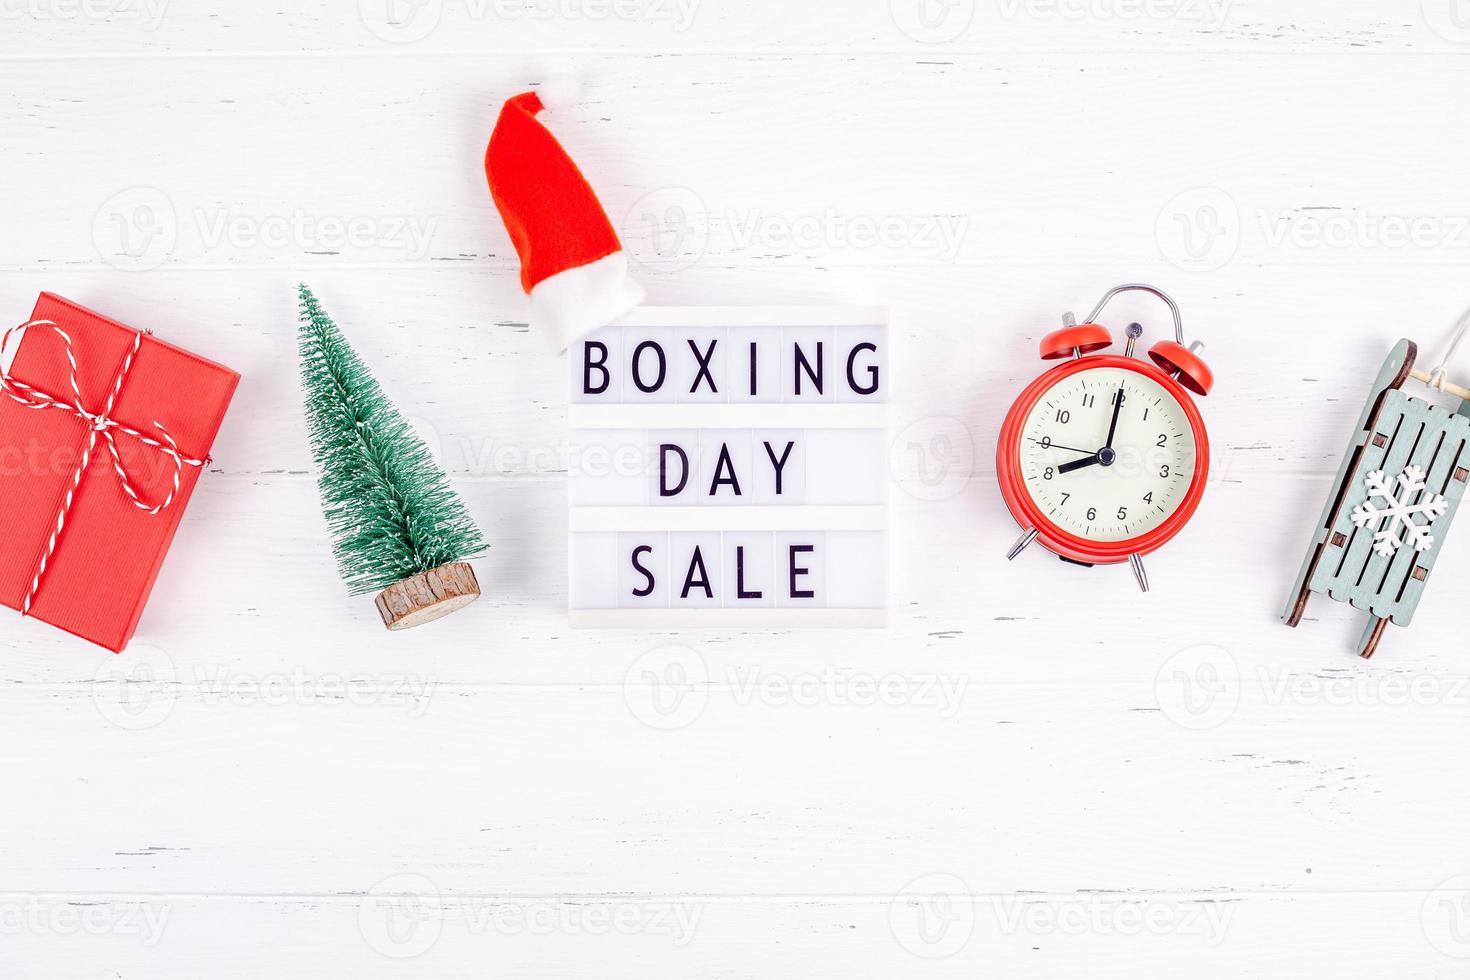 Boxing day sale seasonal promotion photo